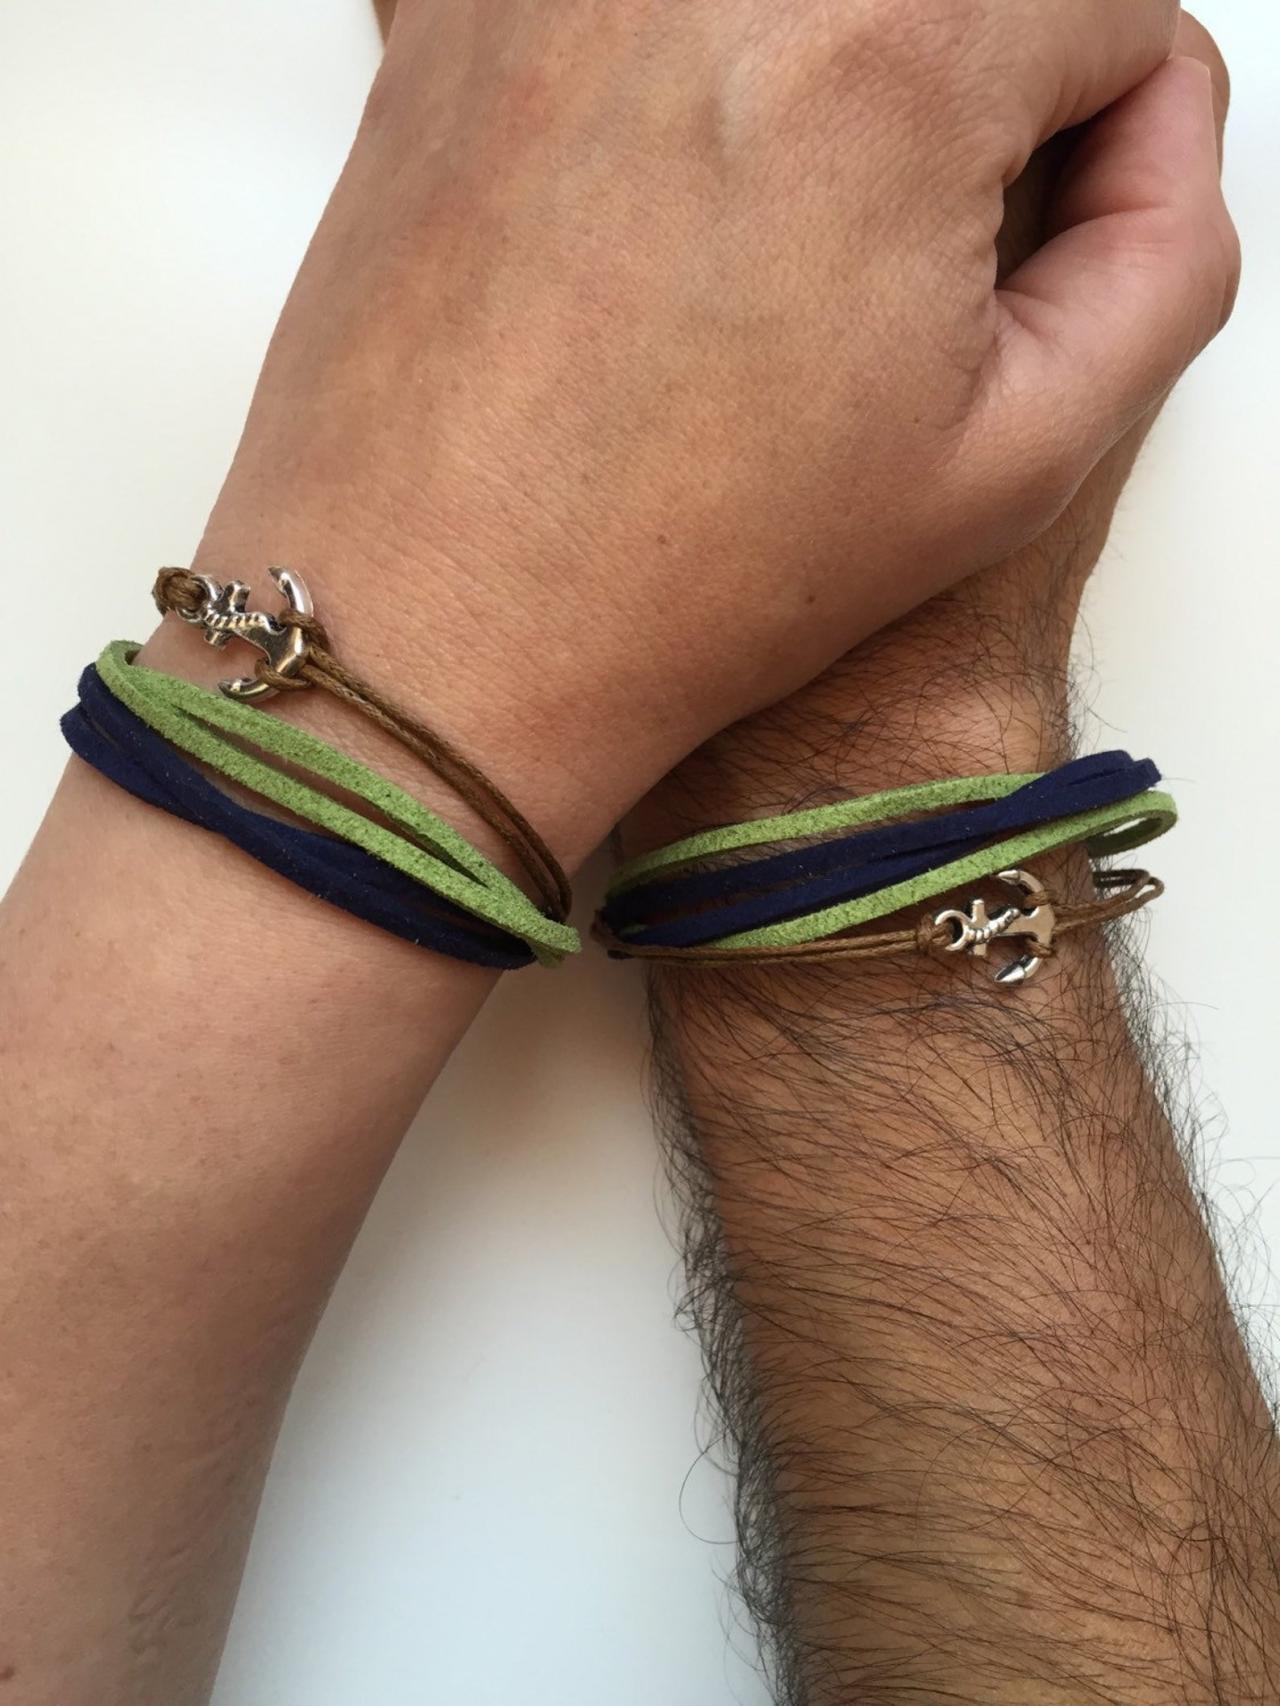 Couples Men Women Bracelets 220- friendship love cuff anchor charm bracelet green blue navy faux suede gift adjustable trendy